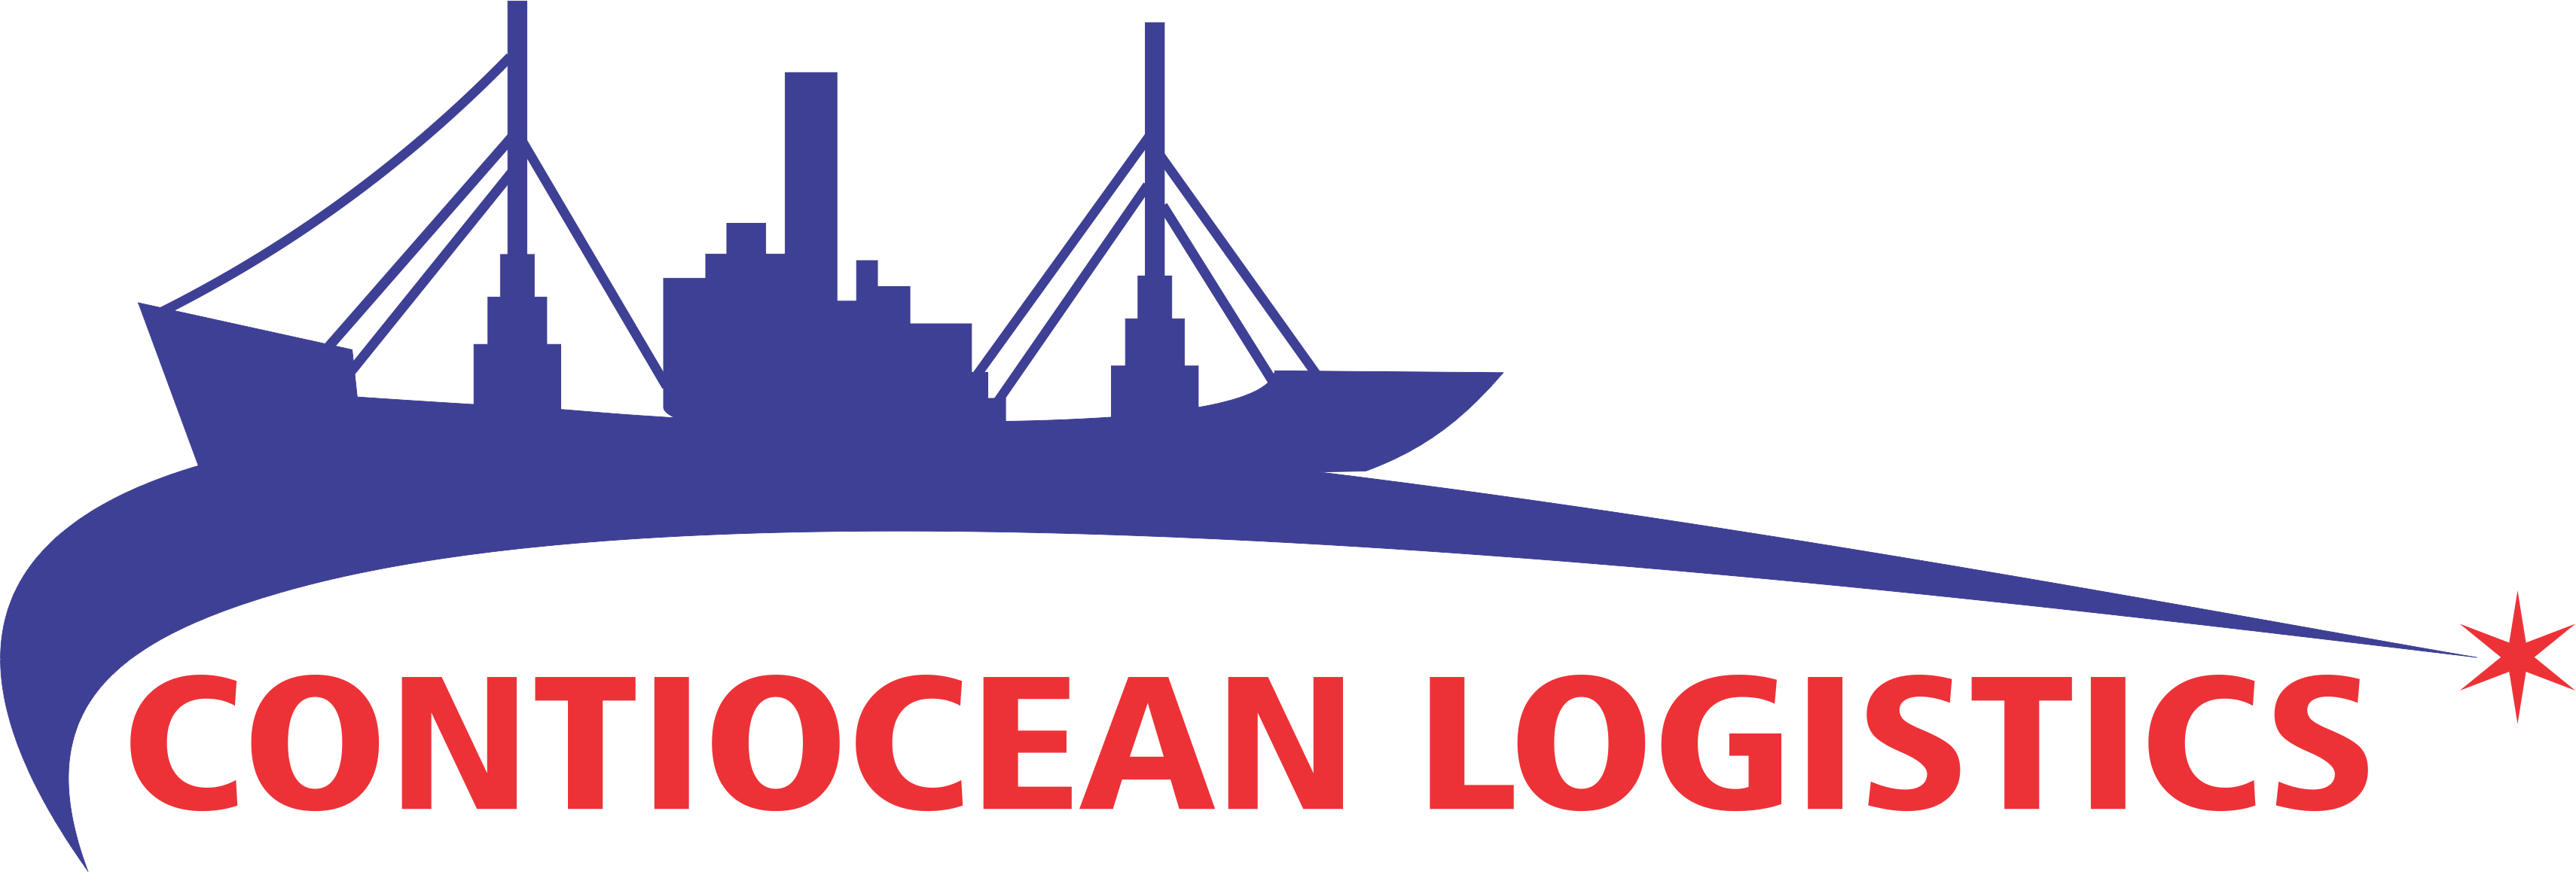 Contiocean Logistics